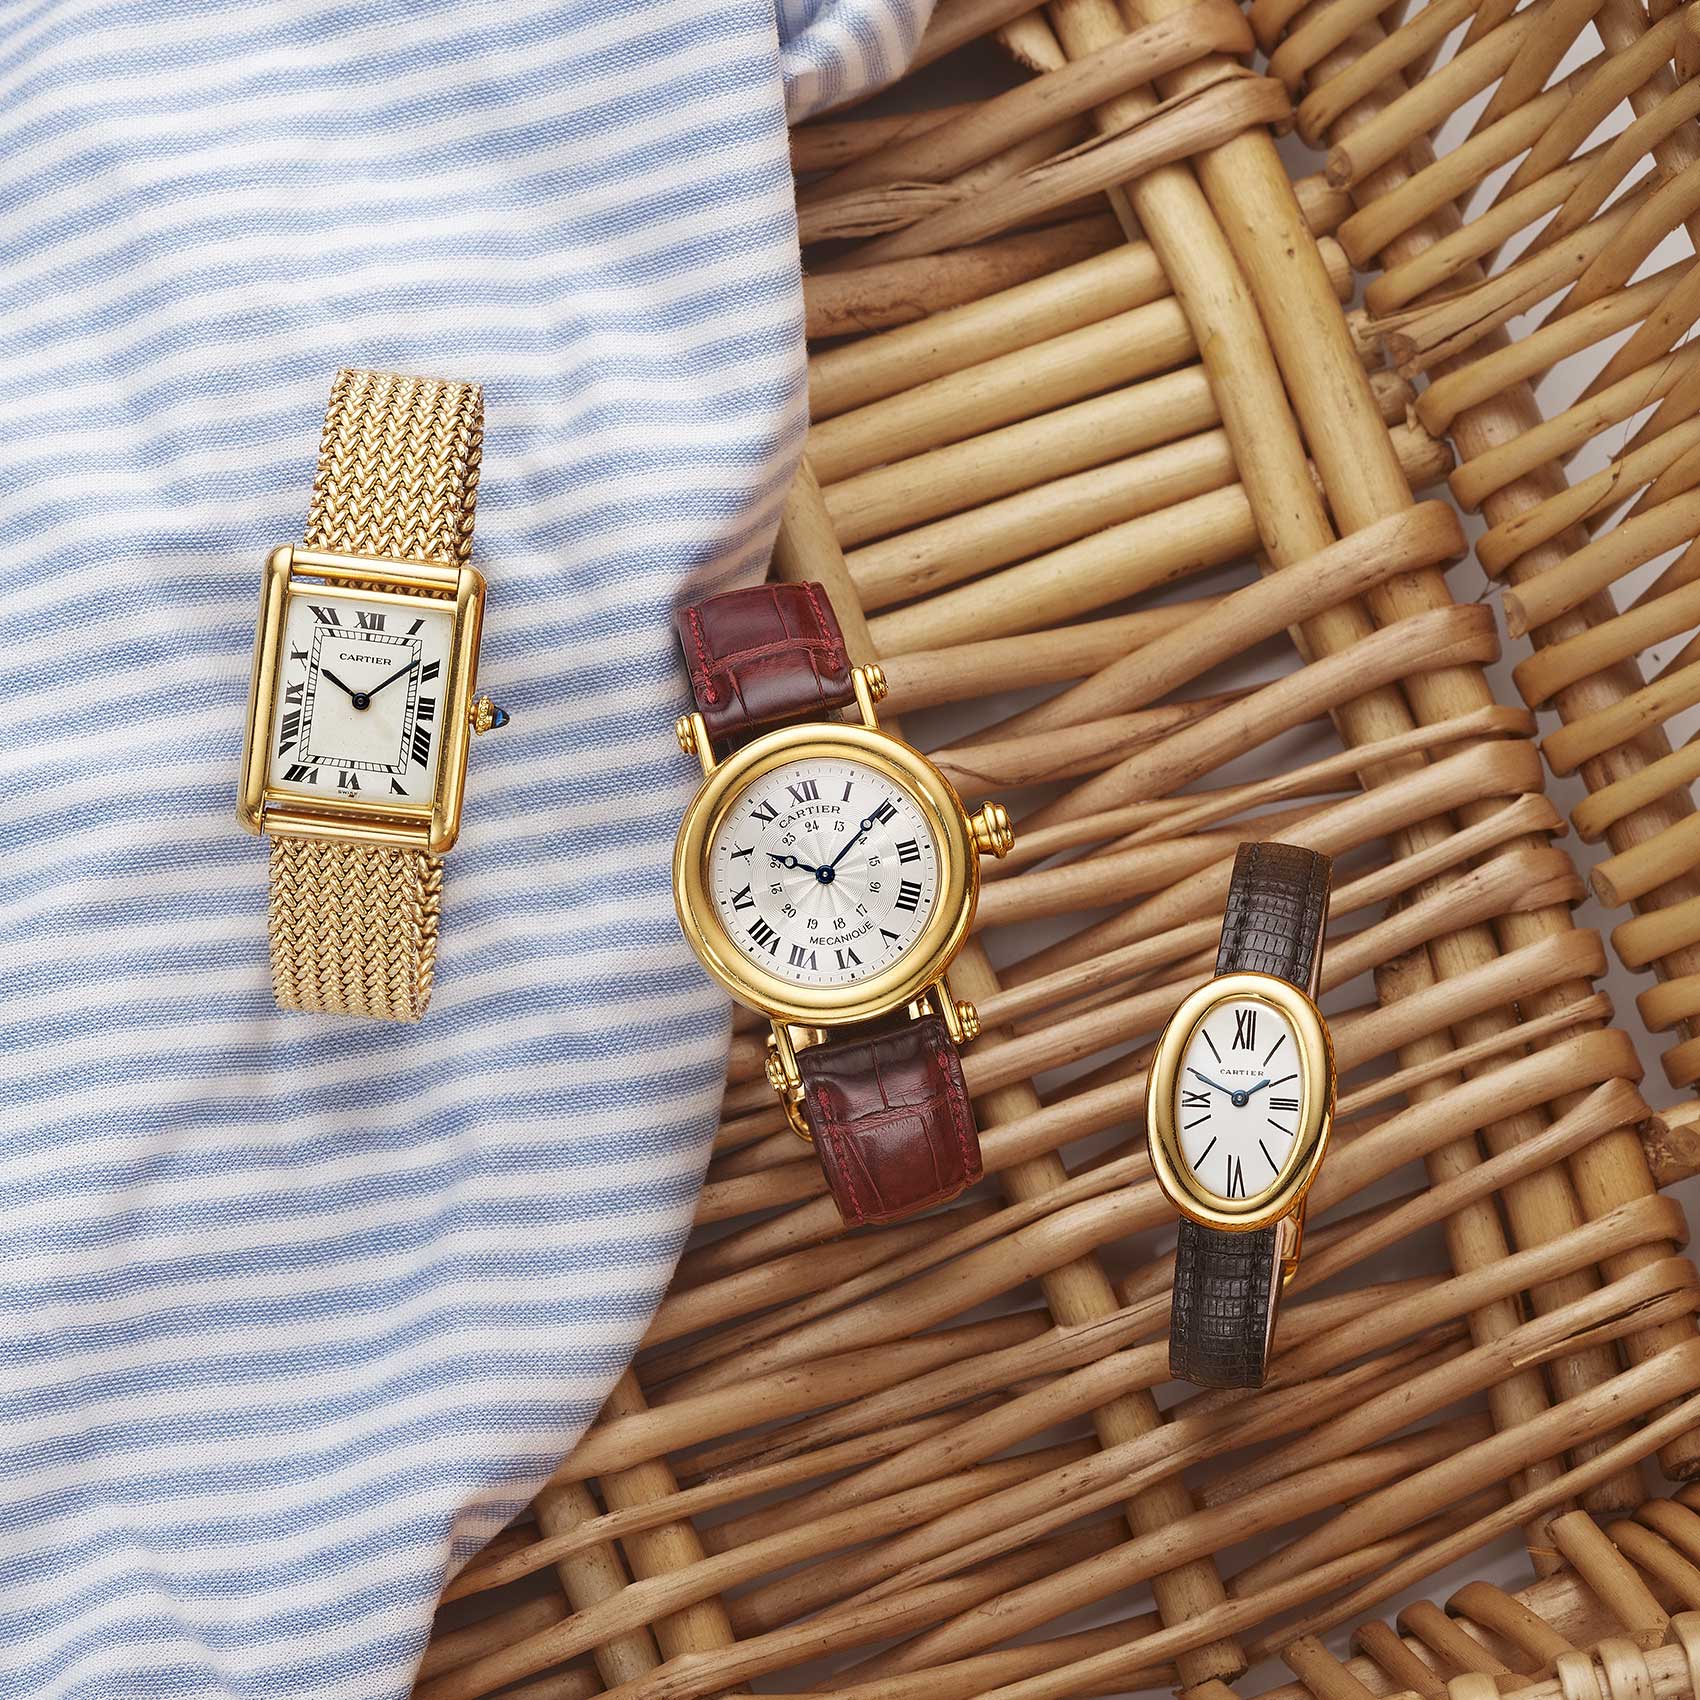 Cartier Watches in Wicker Basket